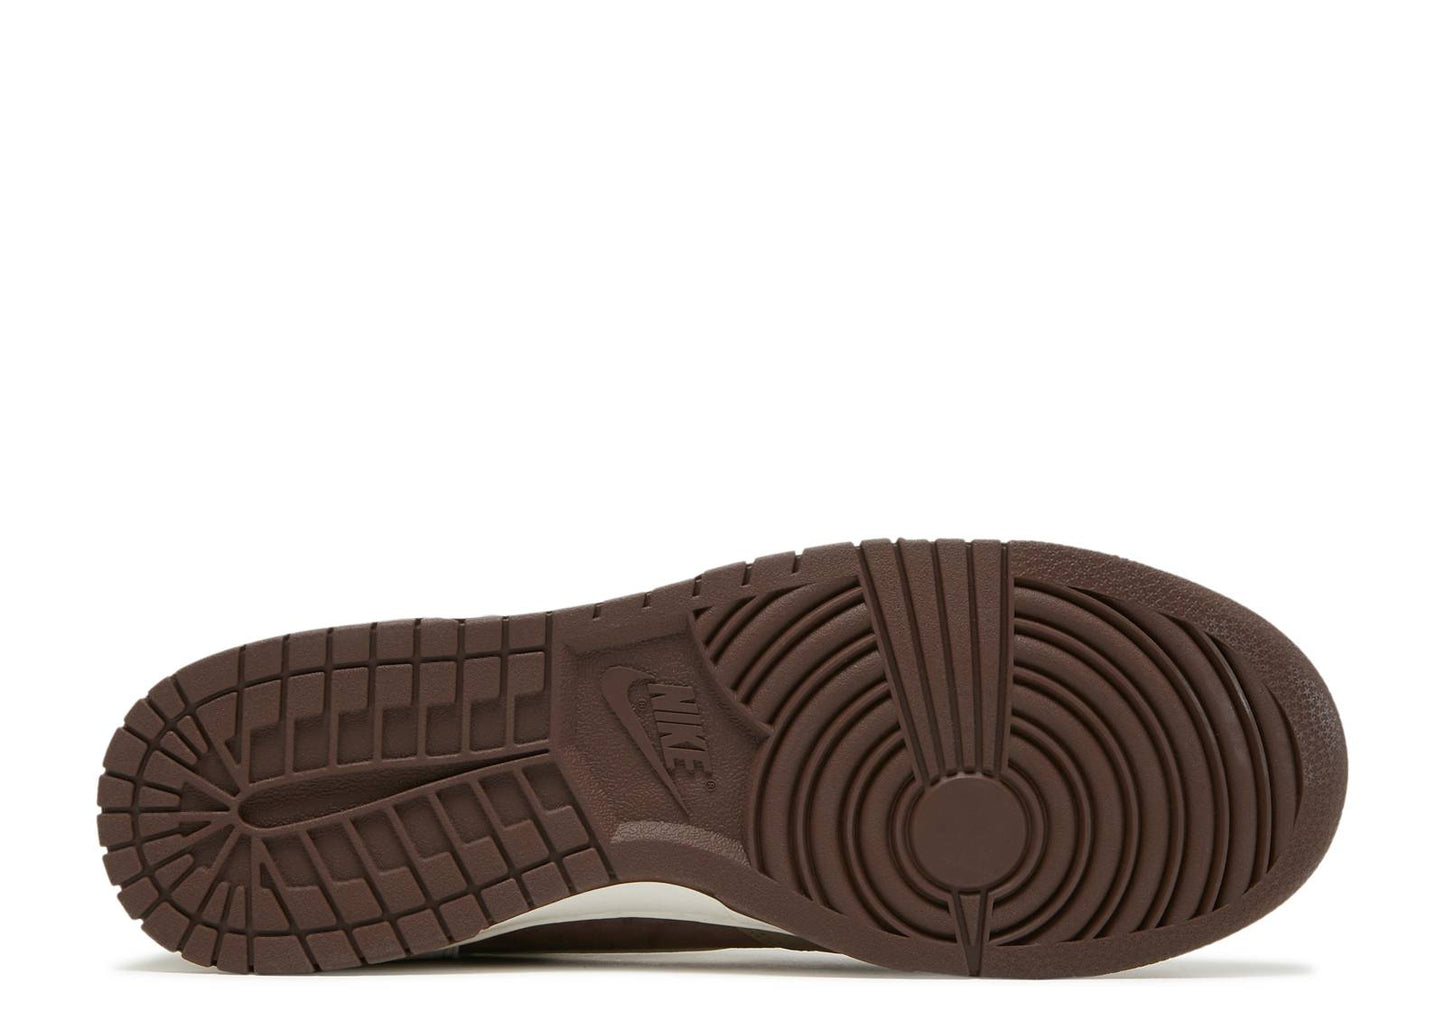 Nike Dunk High Premium "Light Chocolate"